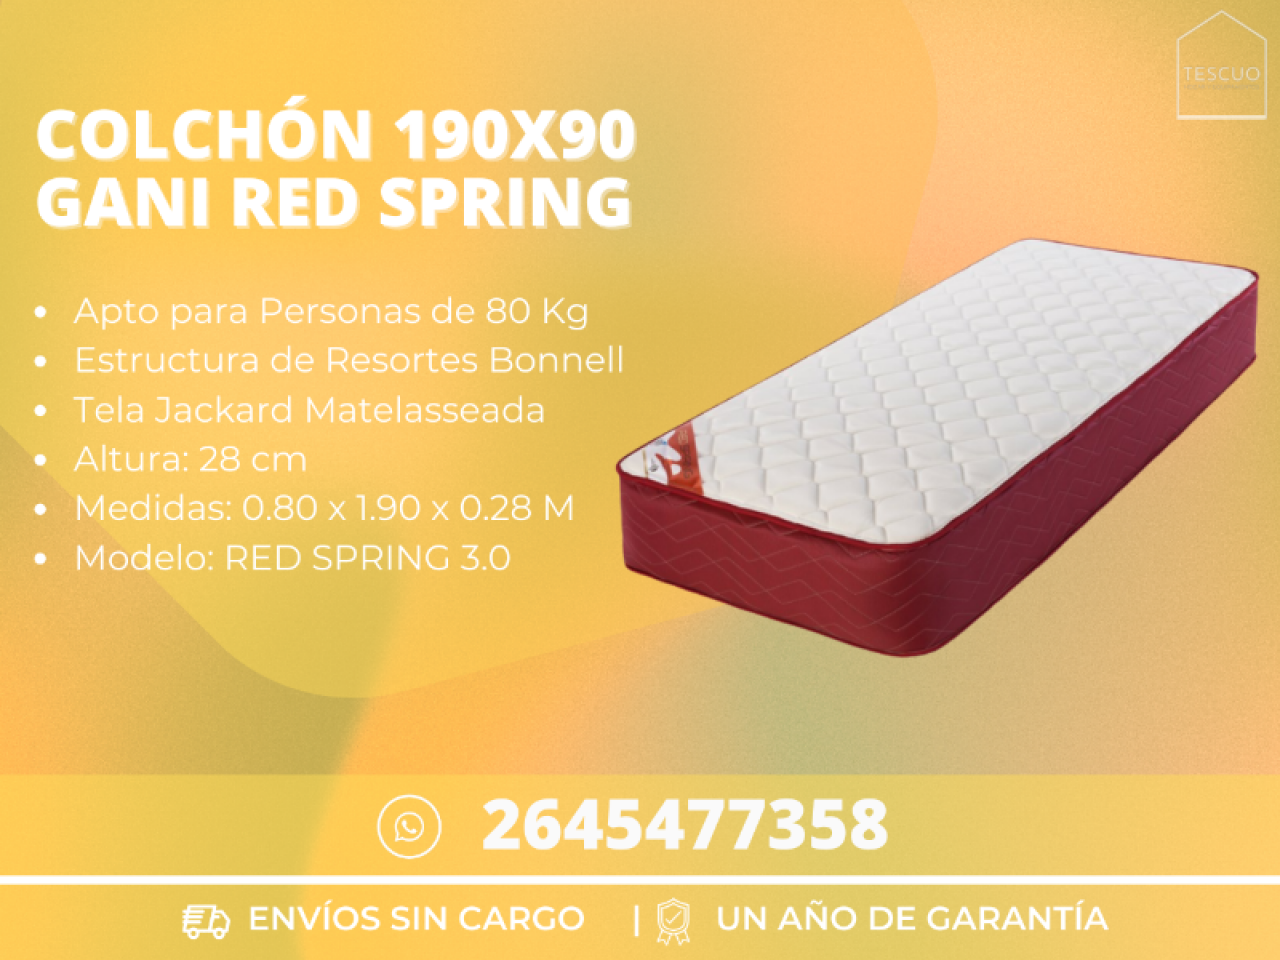 Colchon 190x90 Gani Red Spring - EnvÌos Sin Cargo- Un Año De GarantÌa. -  Comprá en San Juan